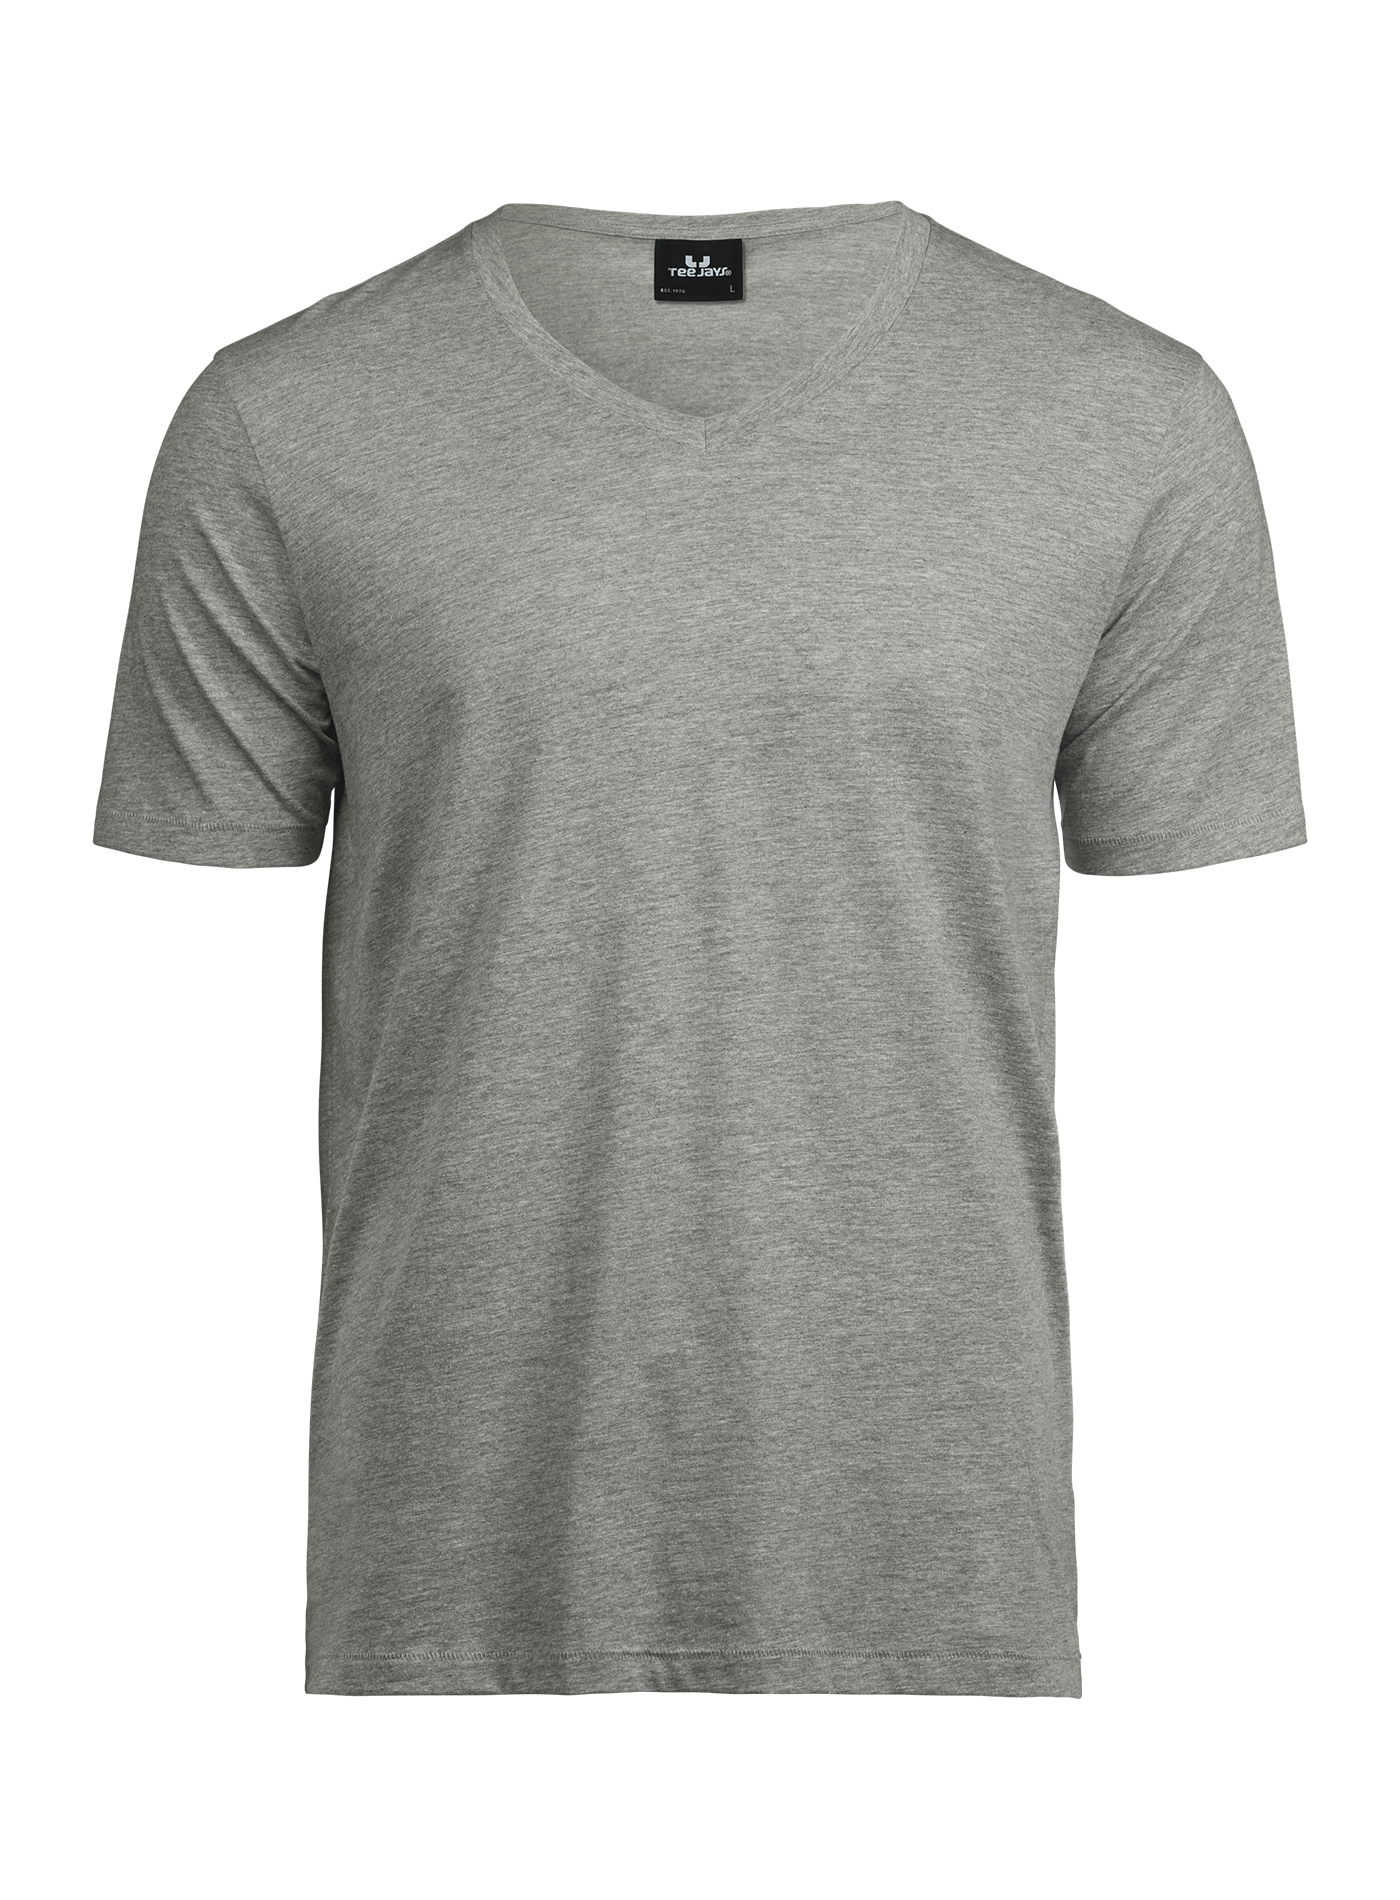 Pánské tričko s výstřihem do V Tee Jays - šedý melír 3XL